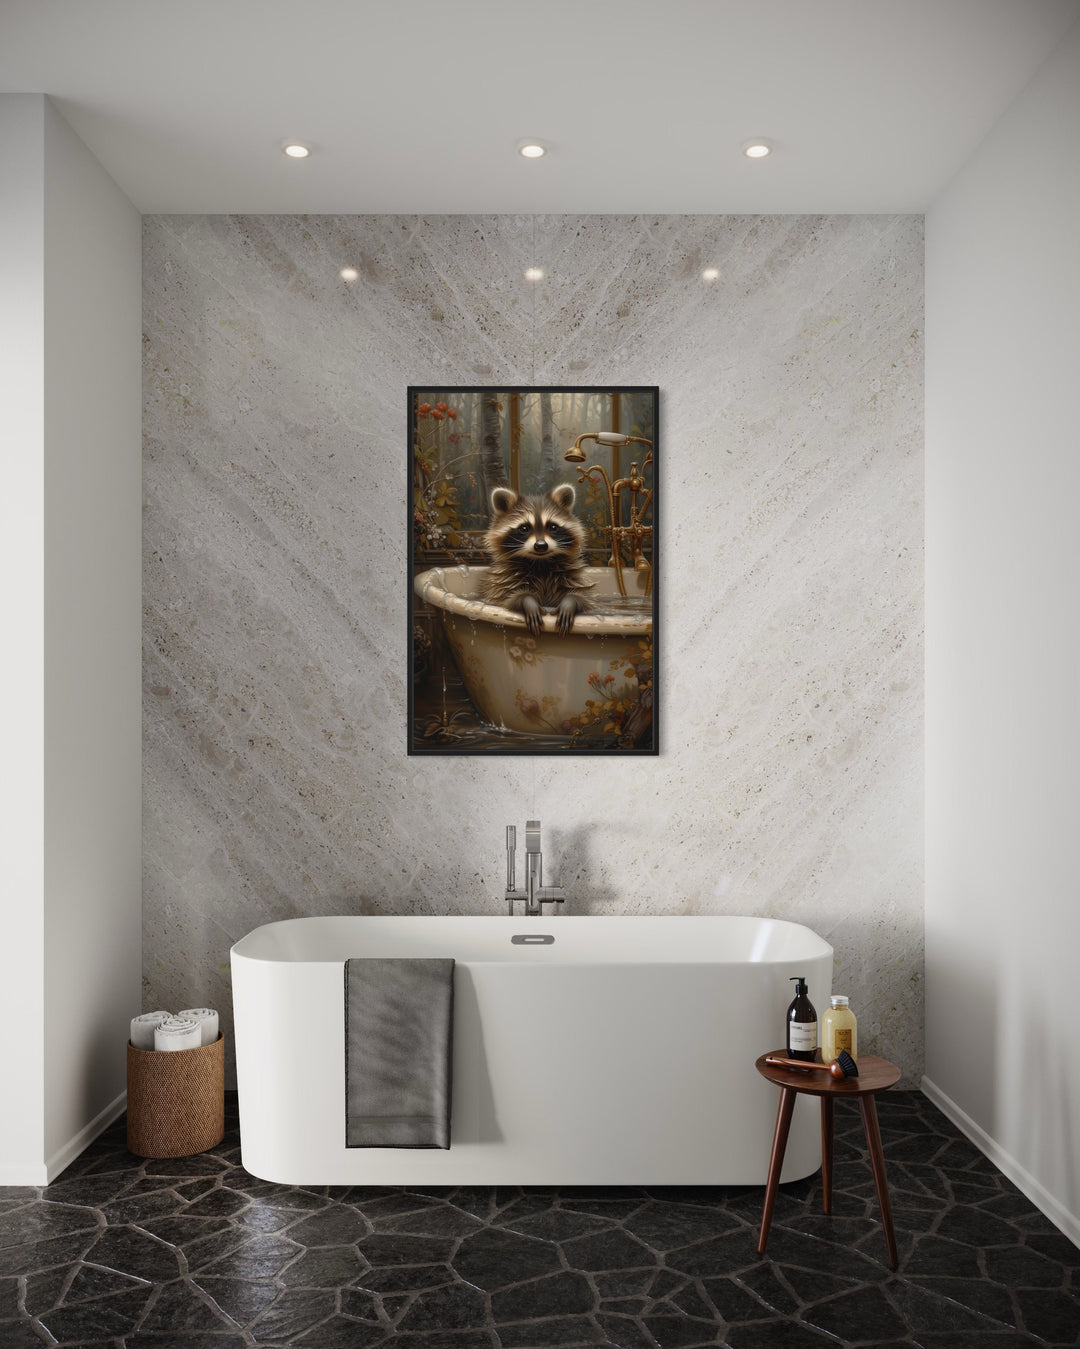 Raccoon In The Bathtub Framed Canvas Wall Art in grey bathroom